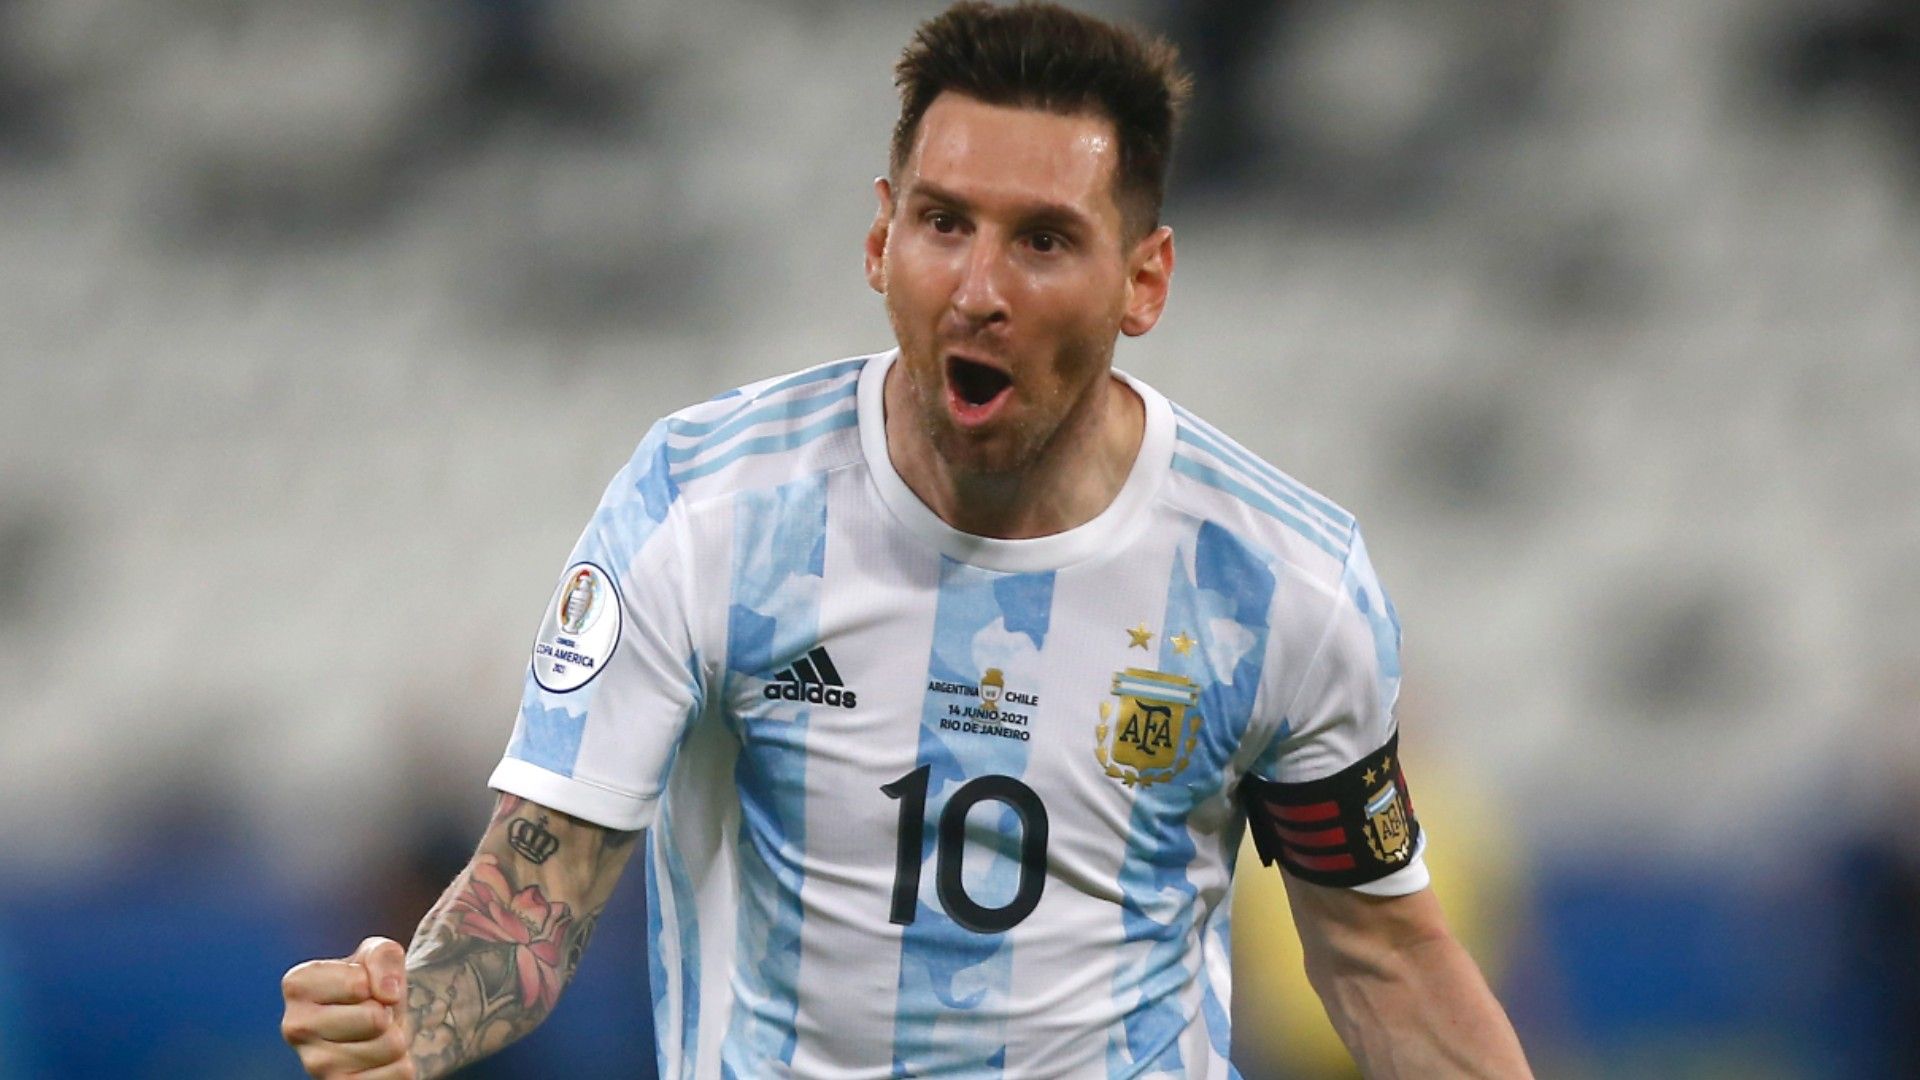 Lionel Messi scores sick free kick goal in 2021 Copa America debut